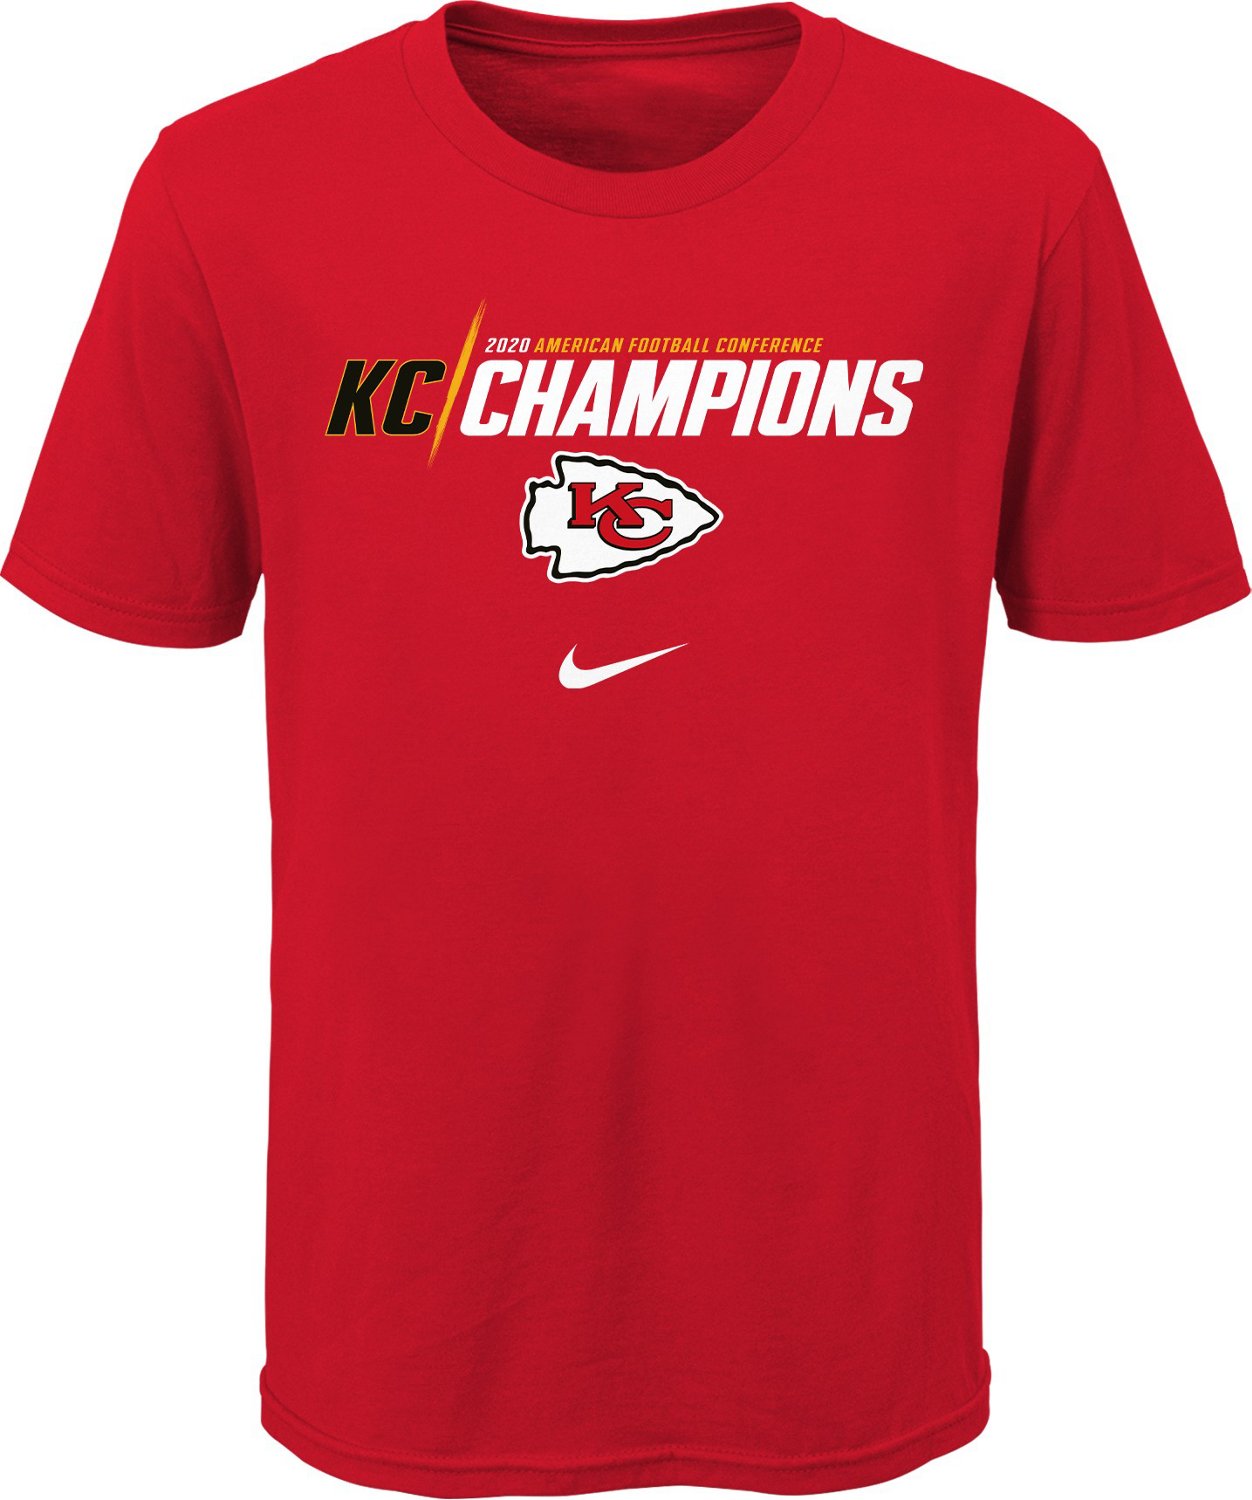 Nike Kids' Kansas City Chiefs '20 AFC Champs Iconic Short Sleeve T ...